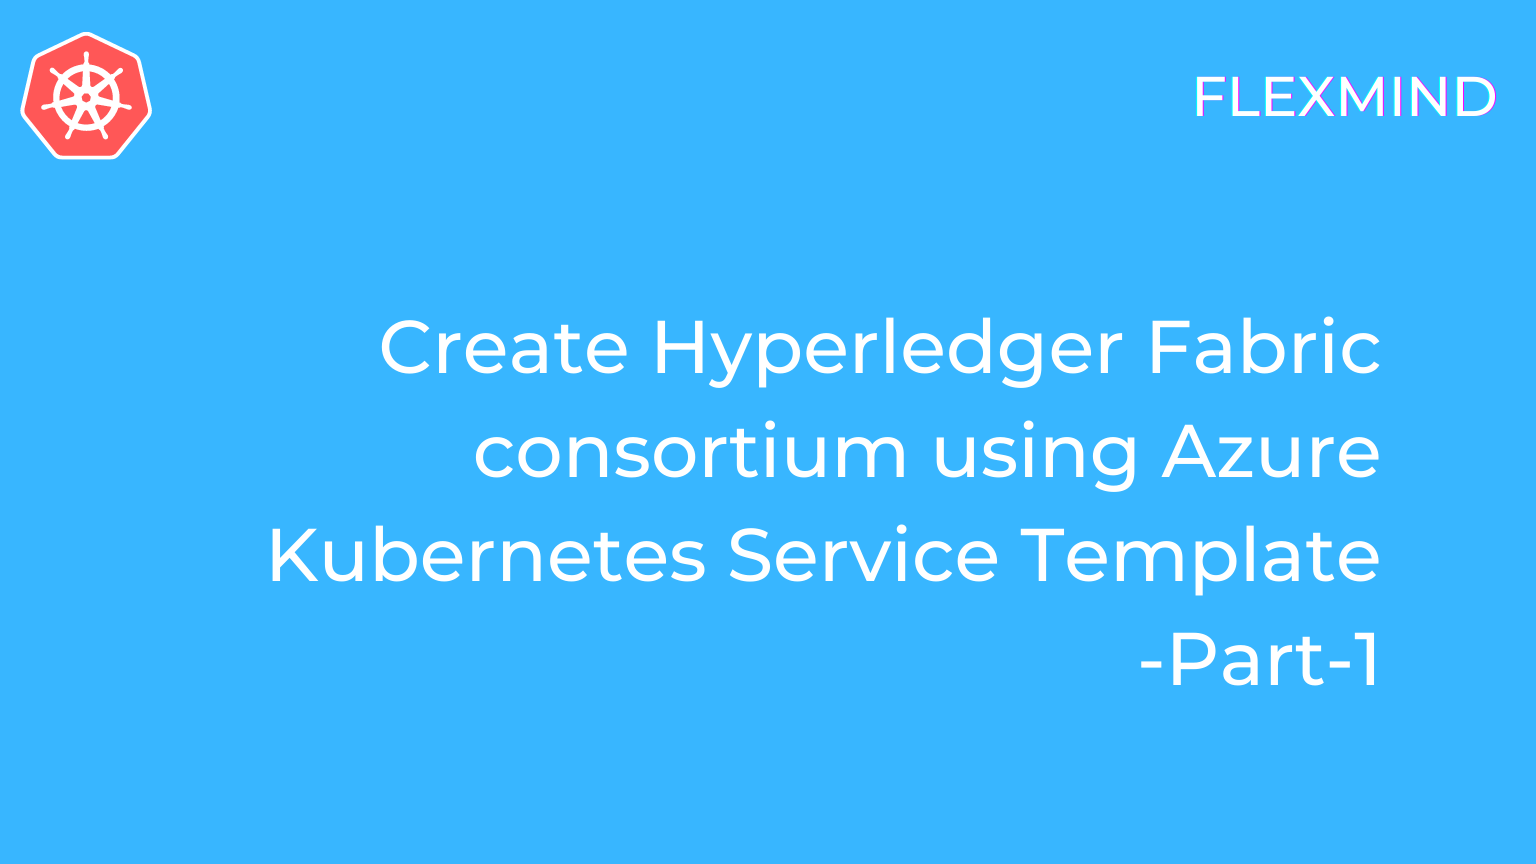 Hyperledger Fabric consortium using Azure Kubernetes Service